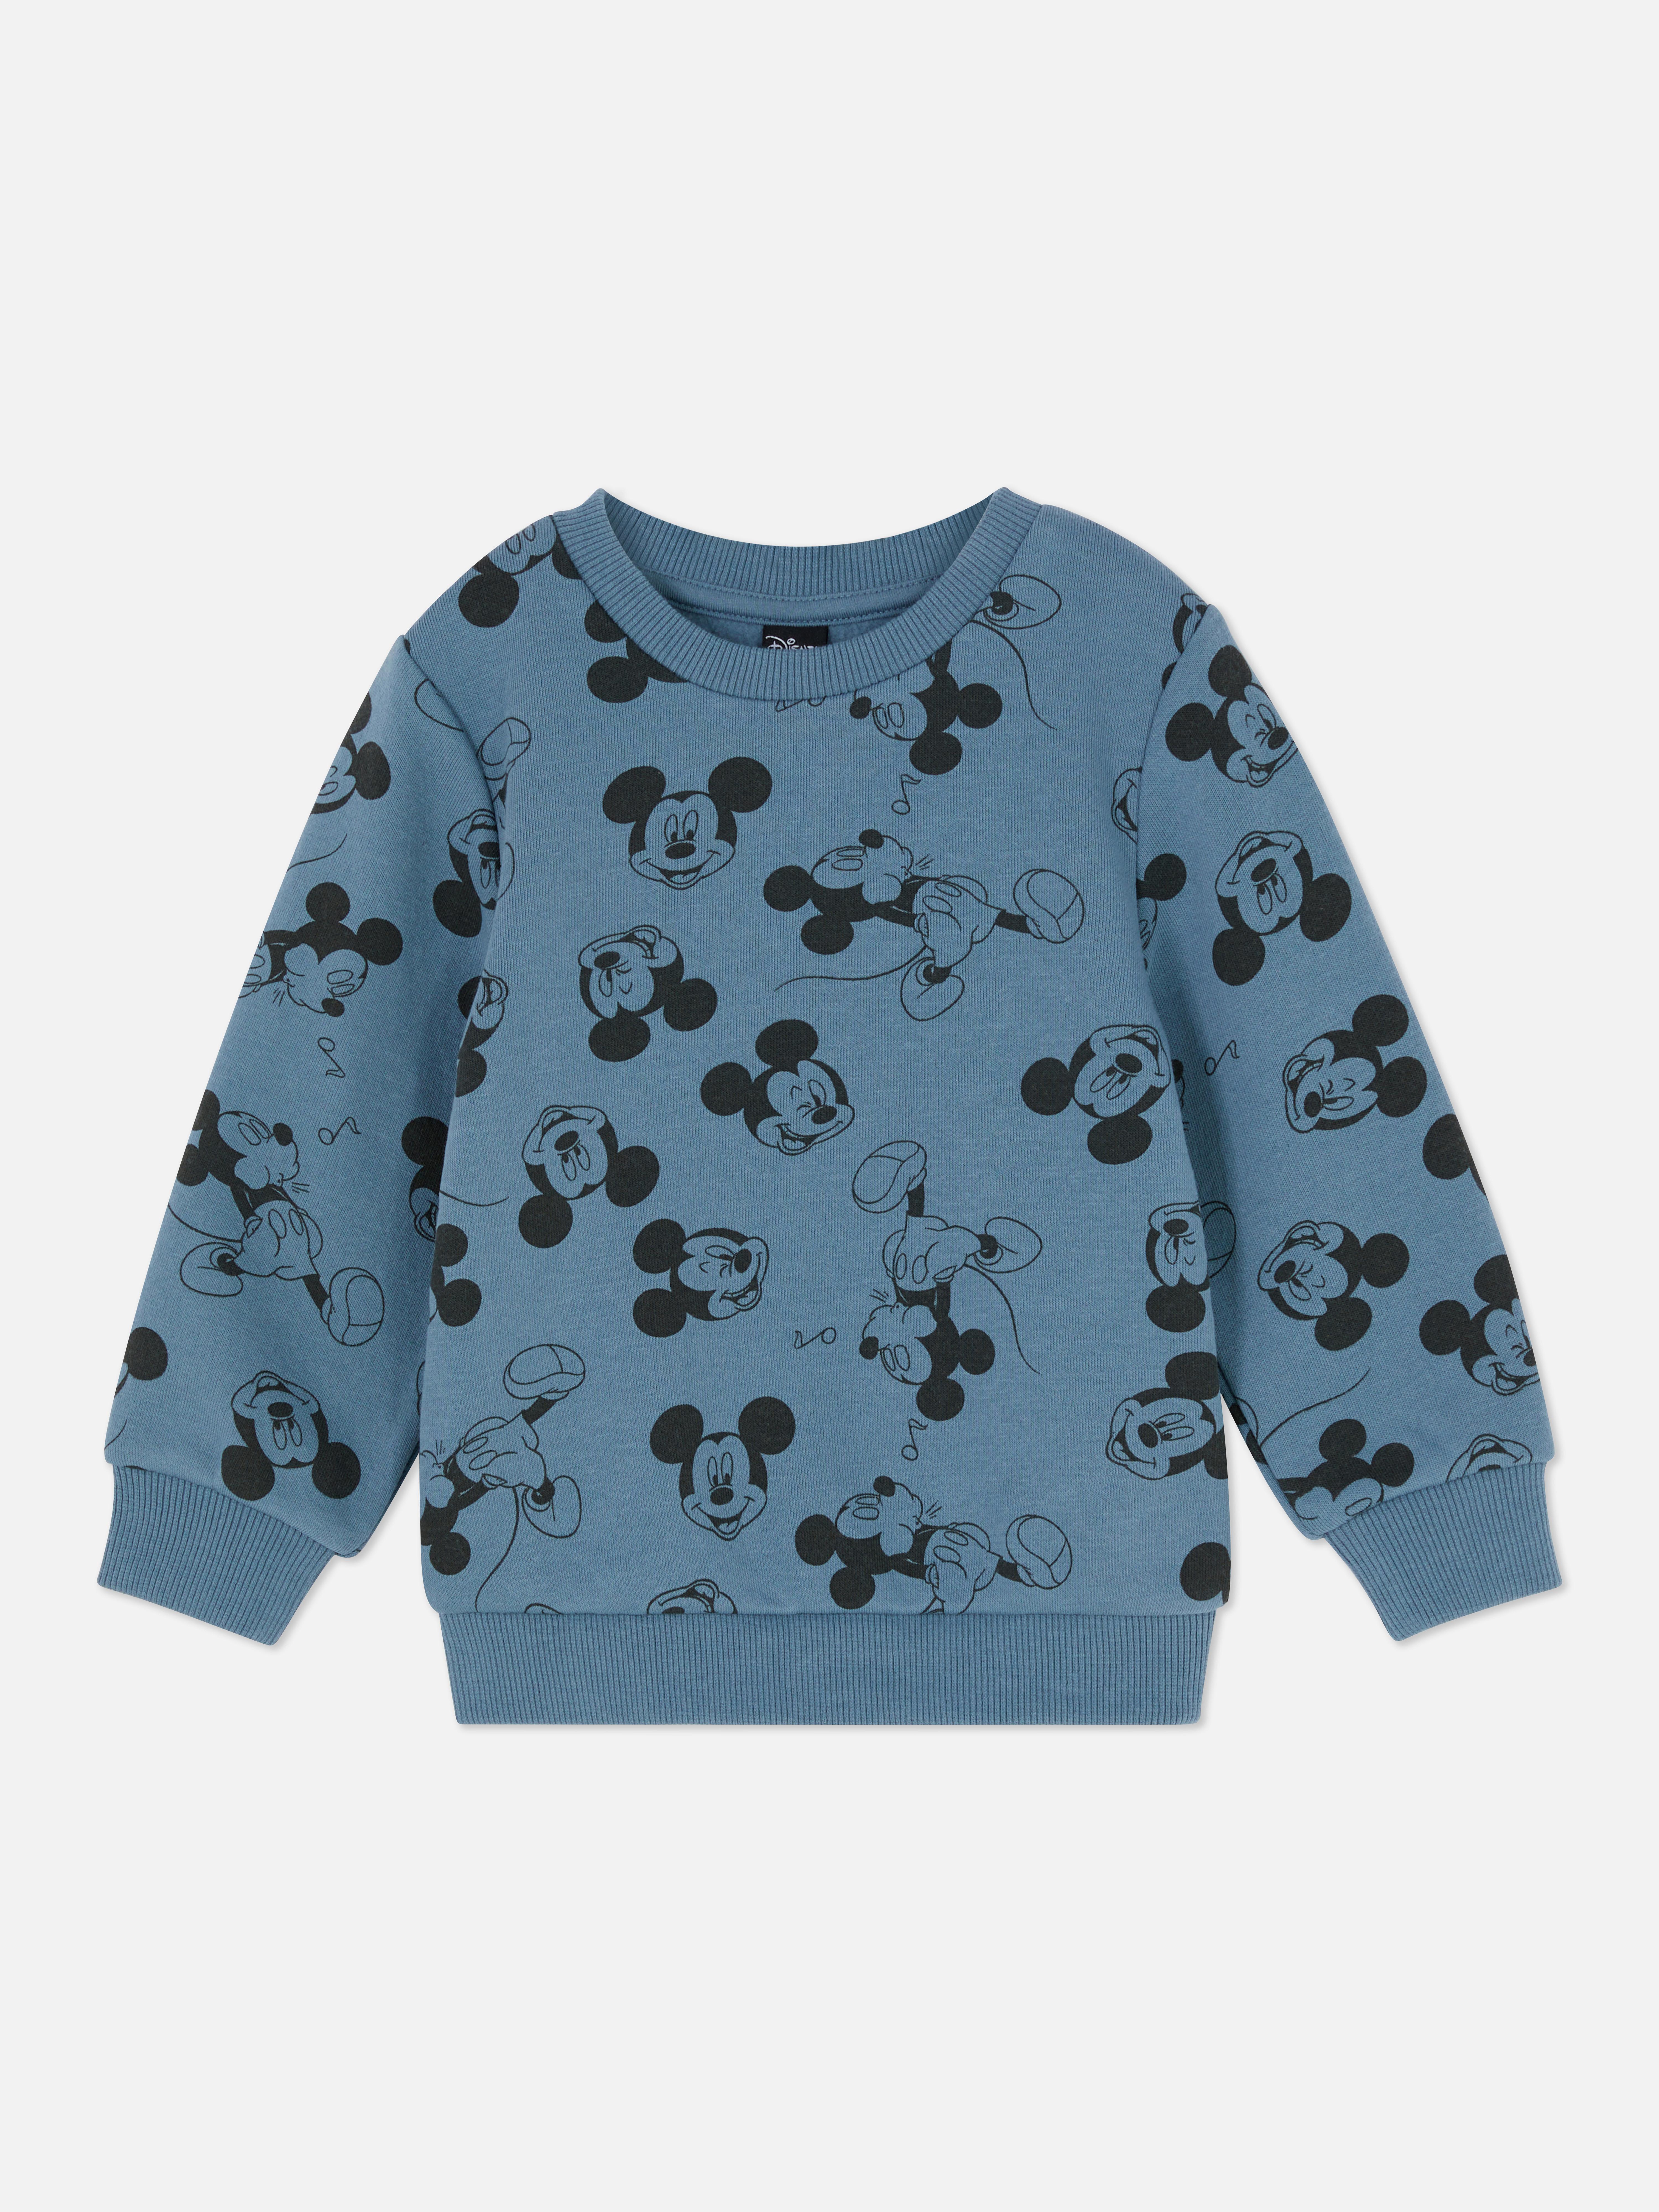 Disney's Mickey Mouse Sweatshirt